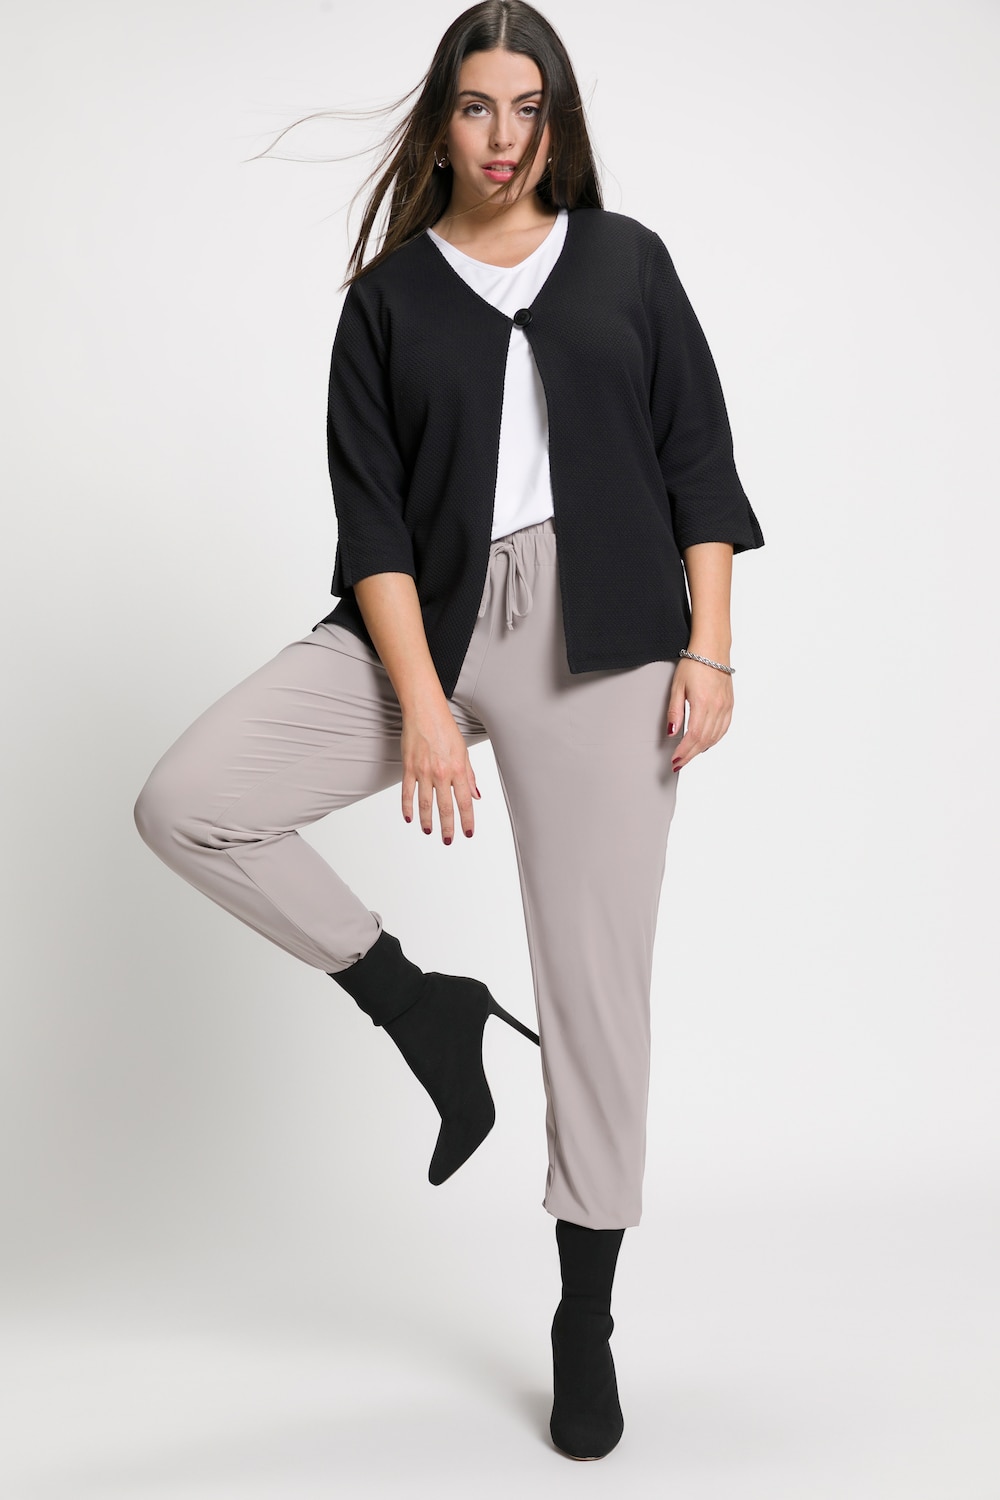 Plus Size Fine Texture V-Neck Stretch Sweatshirt, Woman, black, size: 16/18, cotton/polyester, Ulla Popken